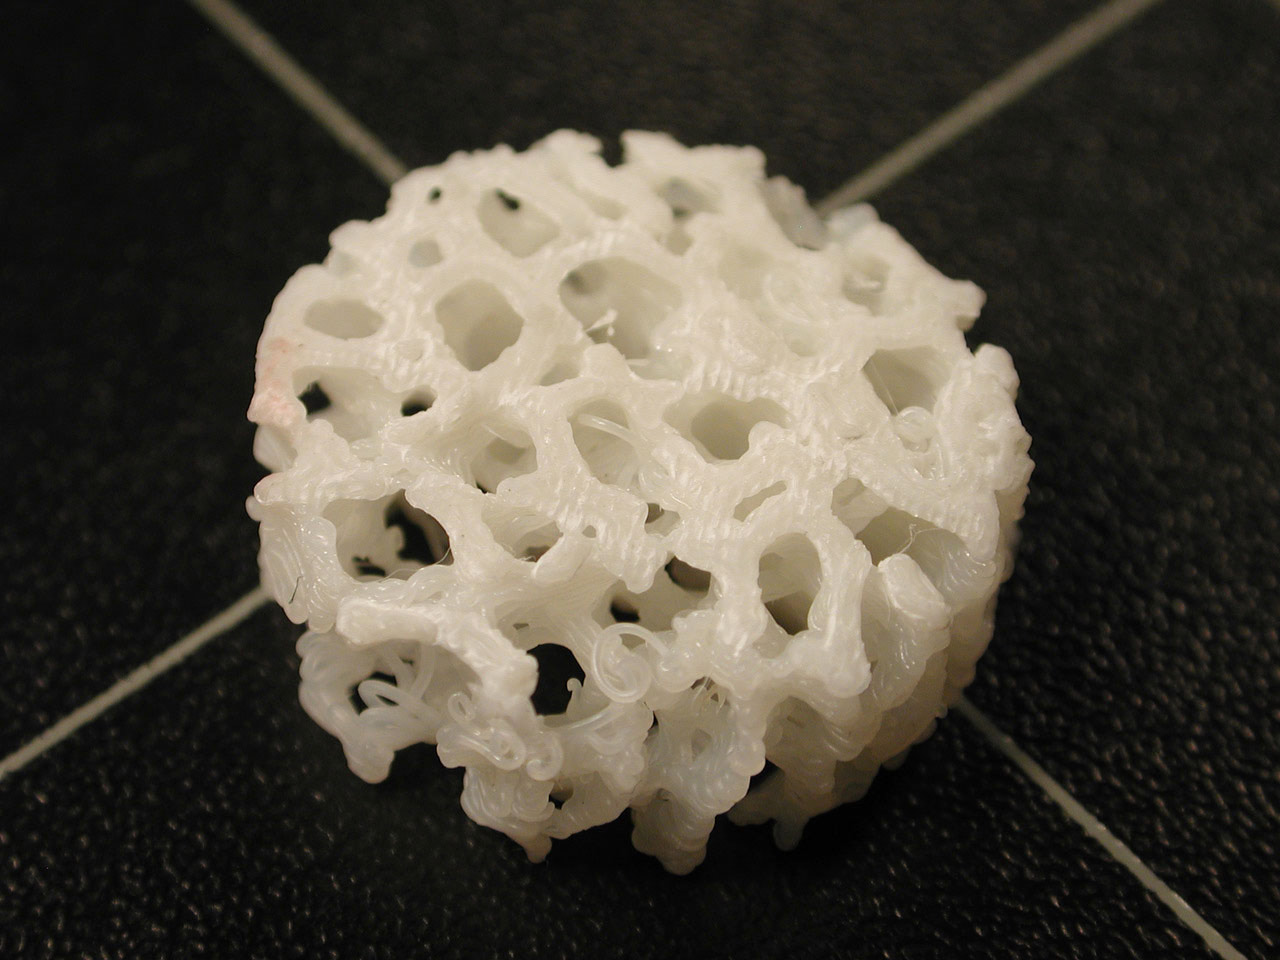 UA Researchers Study How to Regrow Long Bone Segments Using 3D Printing